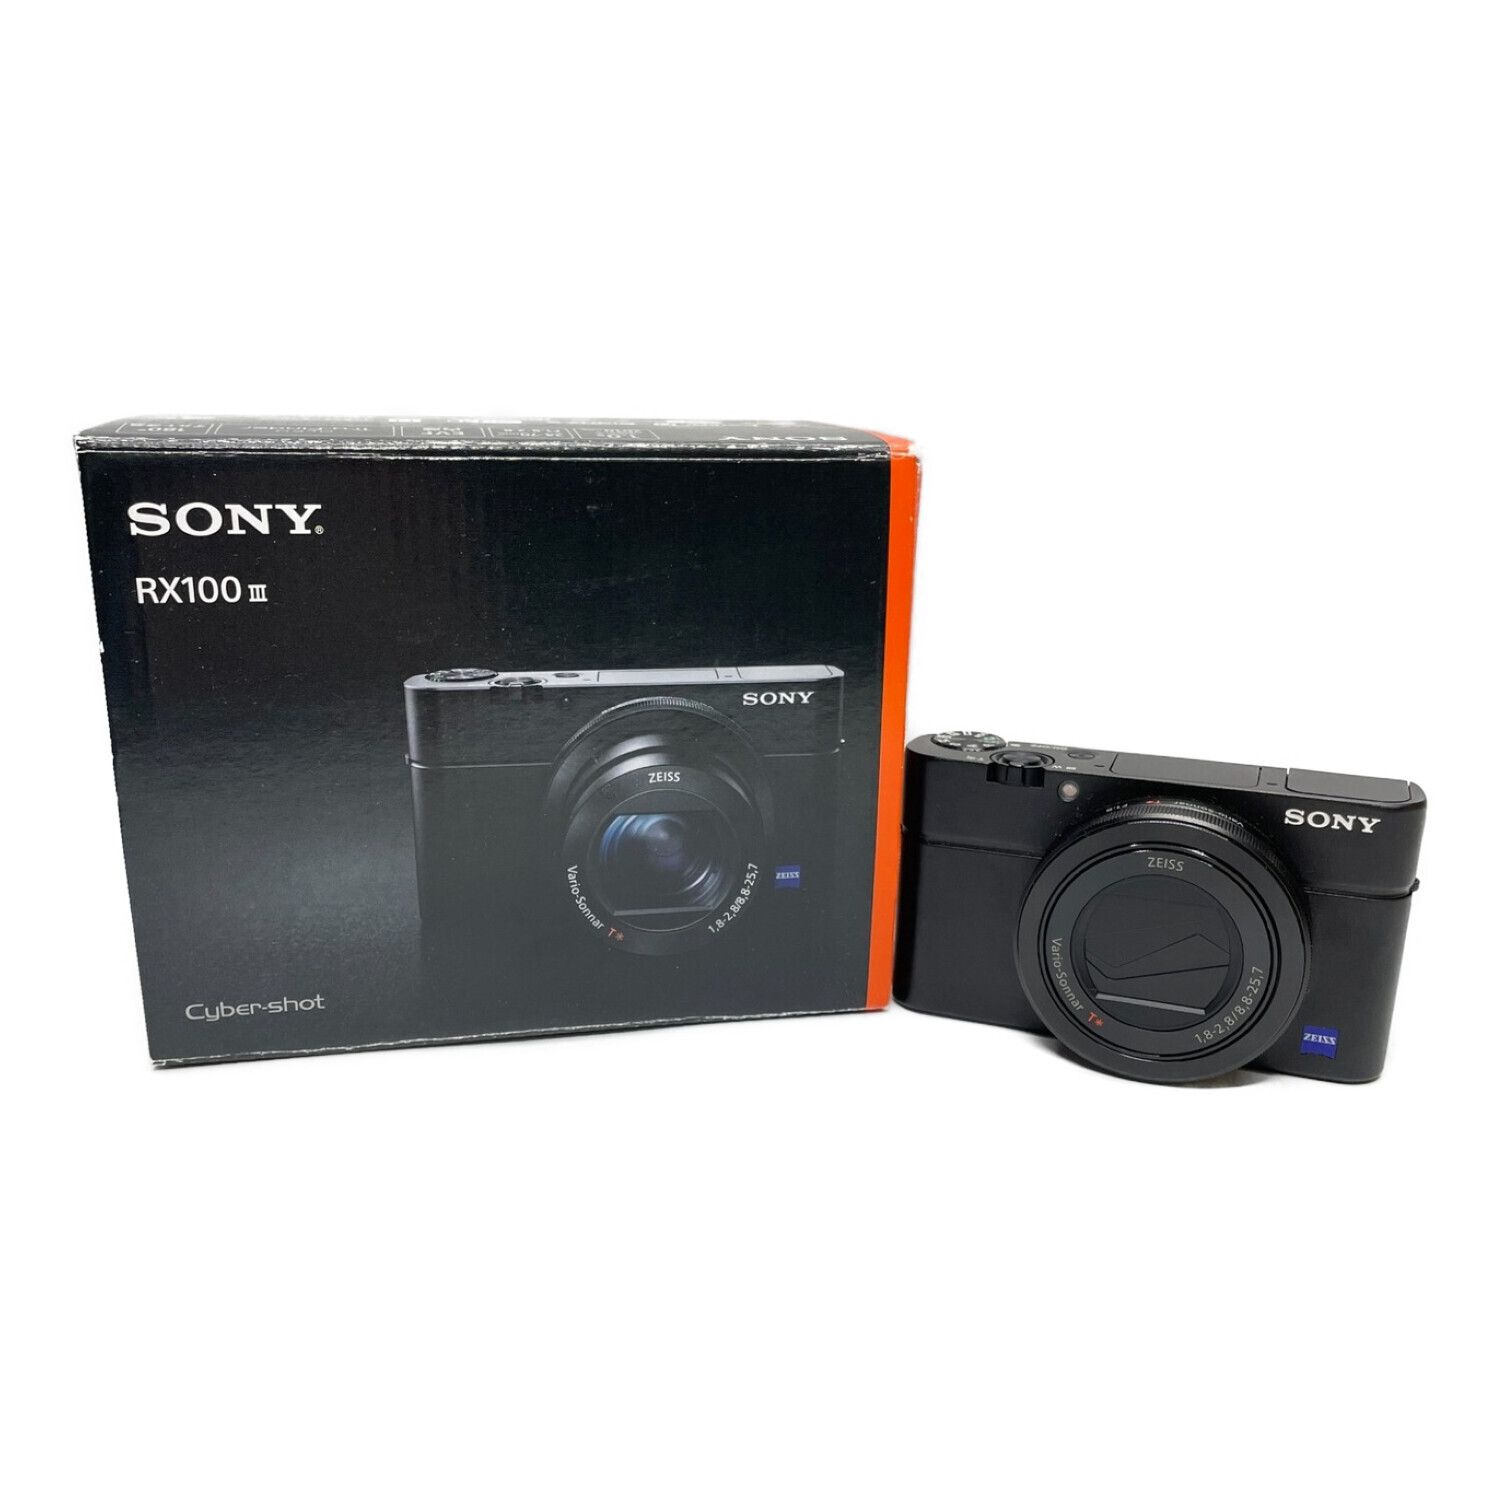 SONY (ソニー) コンパクトデジタルカメラ DSC-RX100M3 2090万画素 専用